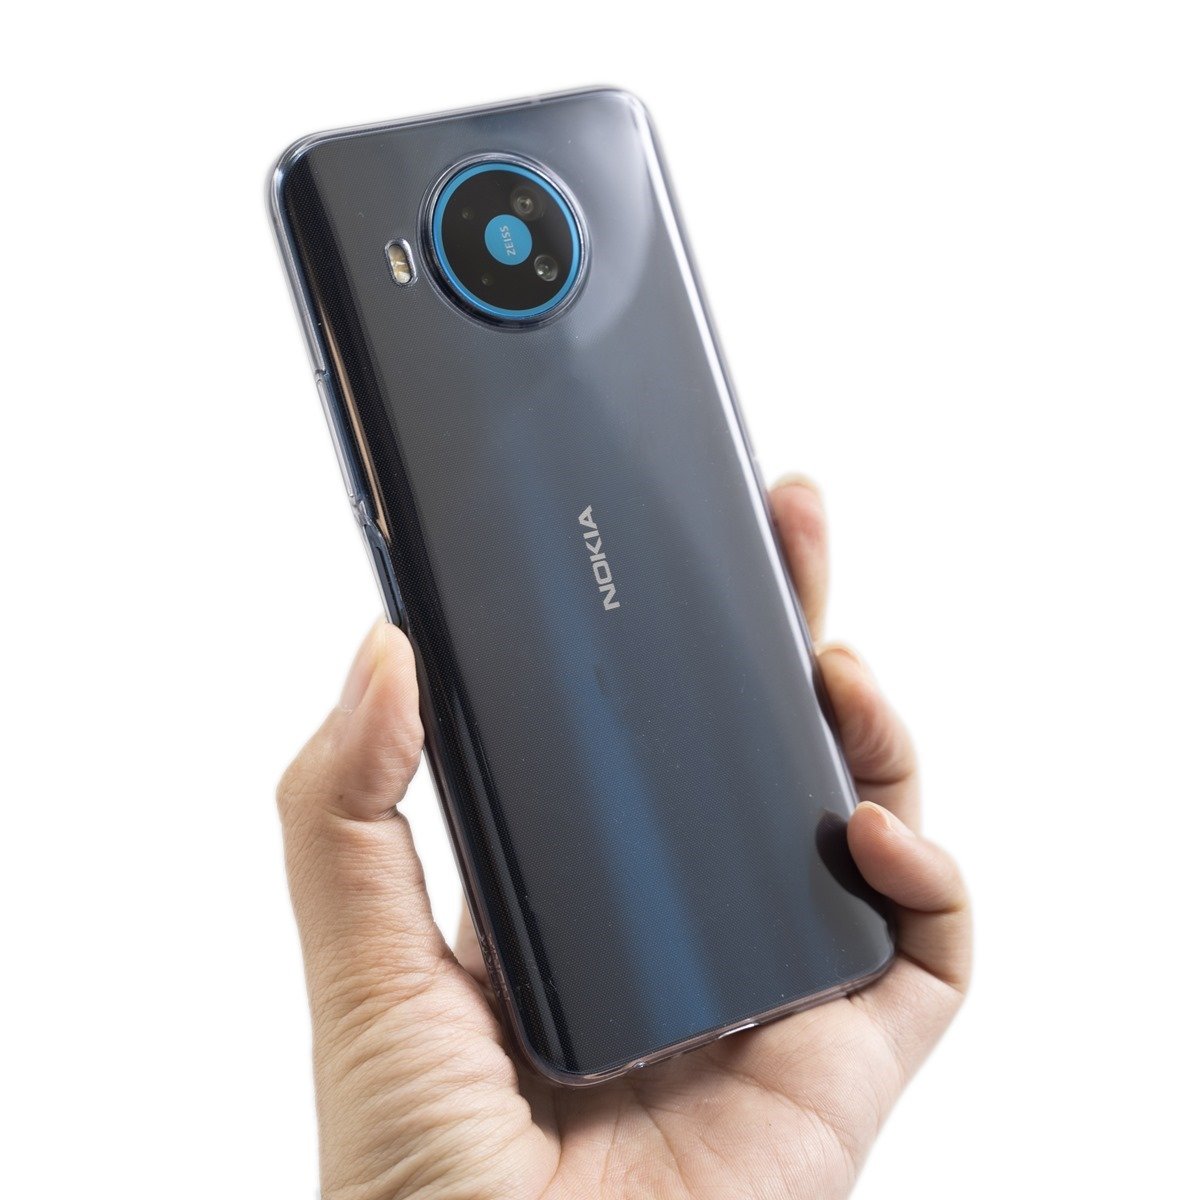 Nokia 首款 5G 手機來了！Nokia 8.3 支援 5G 最多頻段全球最好用、大螢幕四鏡頭原生 Android 體驗 @3C 達人廖阿輝